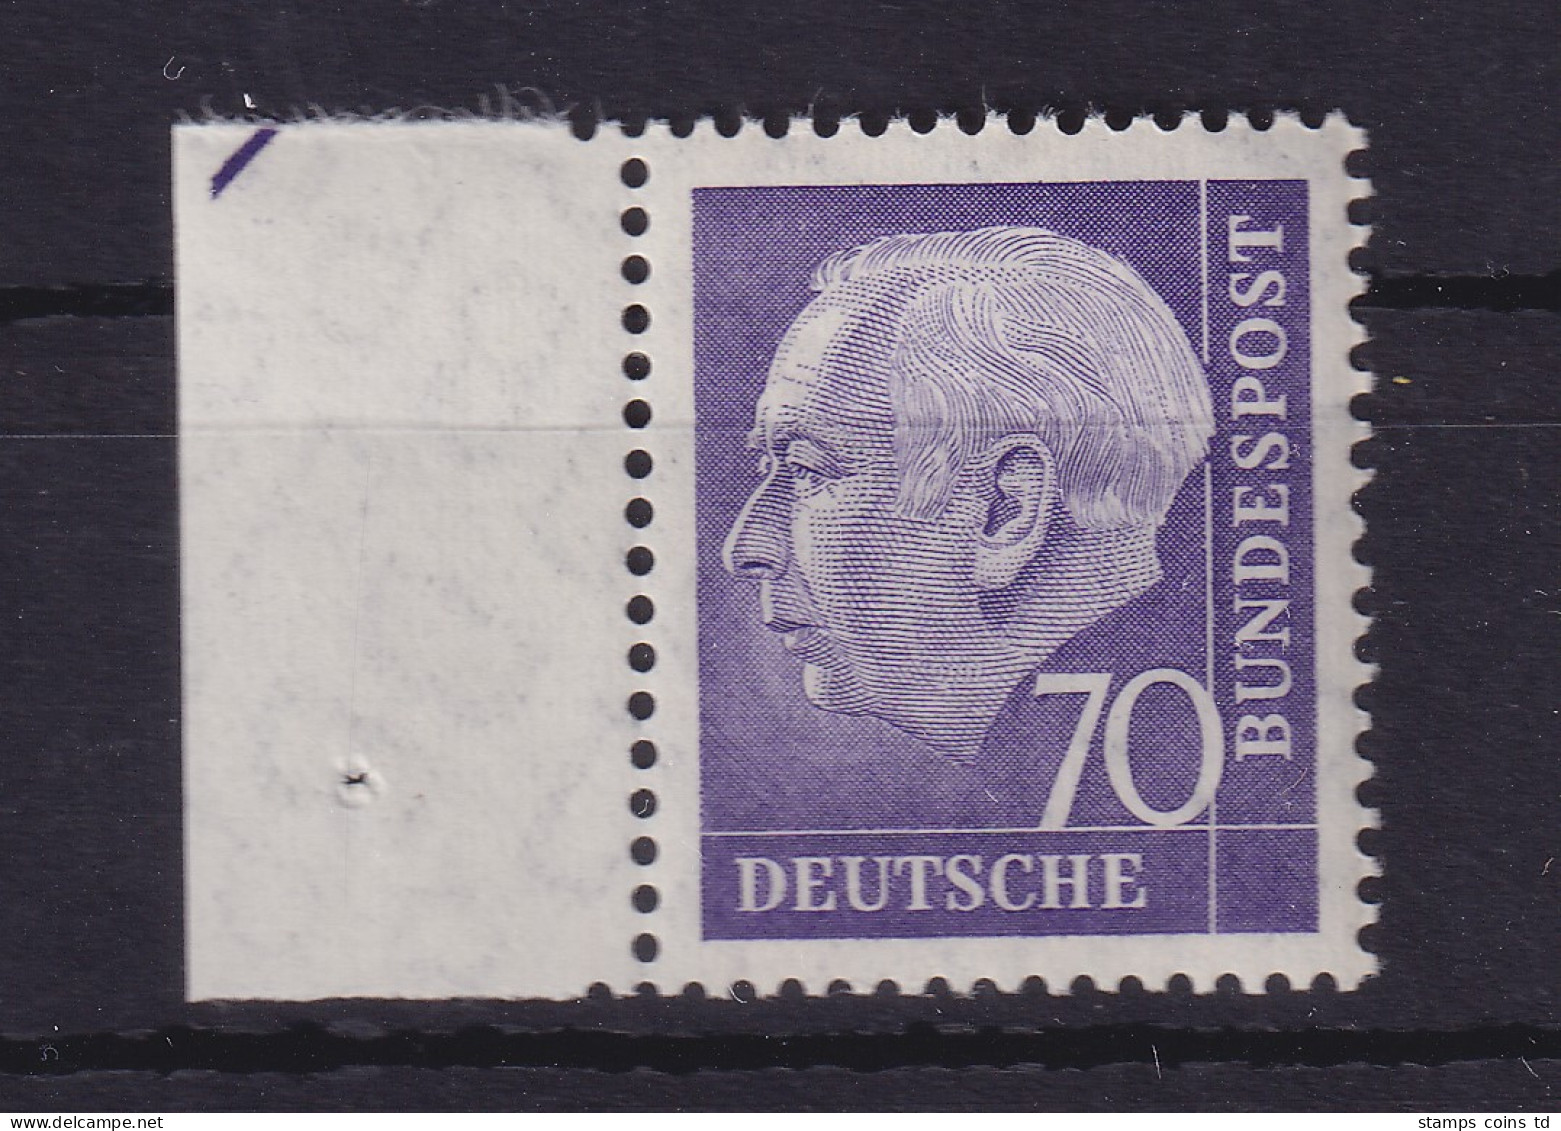 Bundesrepublik 1957 Theodor Heuss 70 Pf Mi.-Nr. 263 X V Randstück Postfrisch ** - Ongebruikt